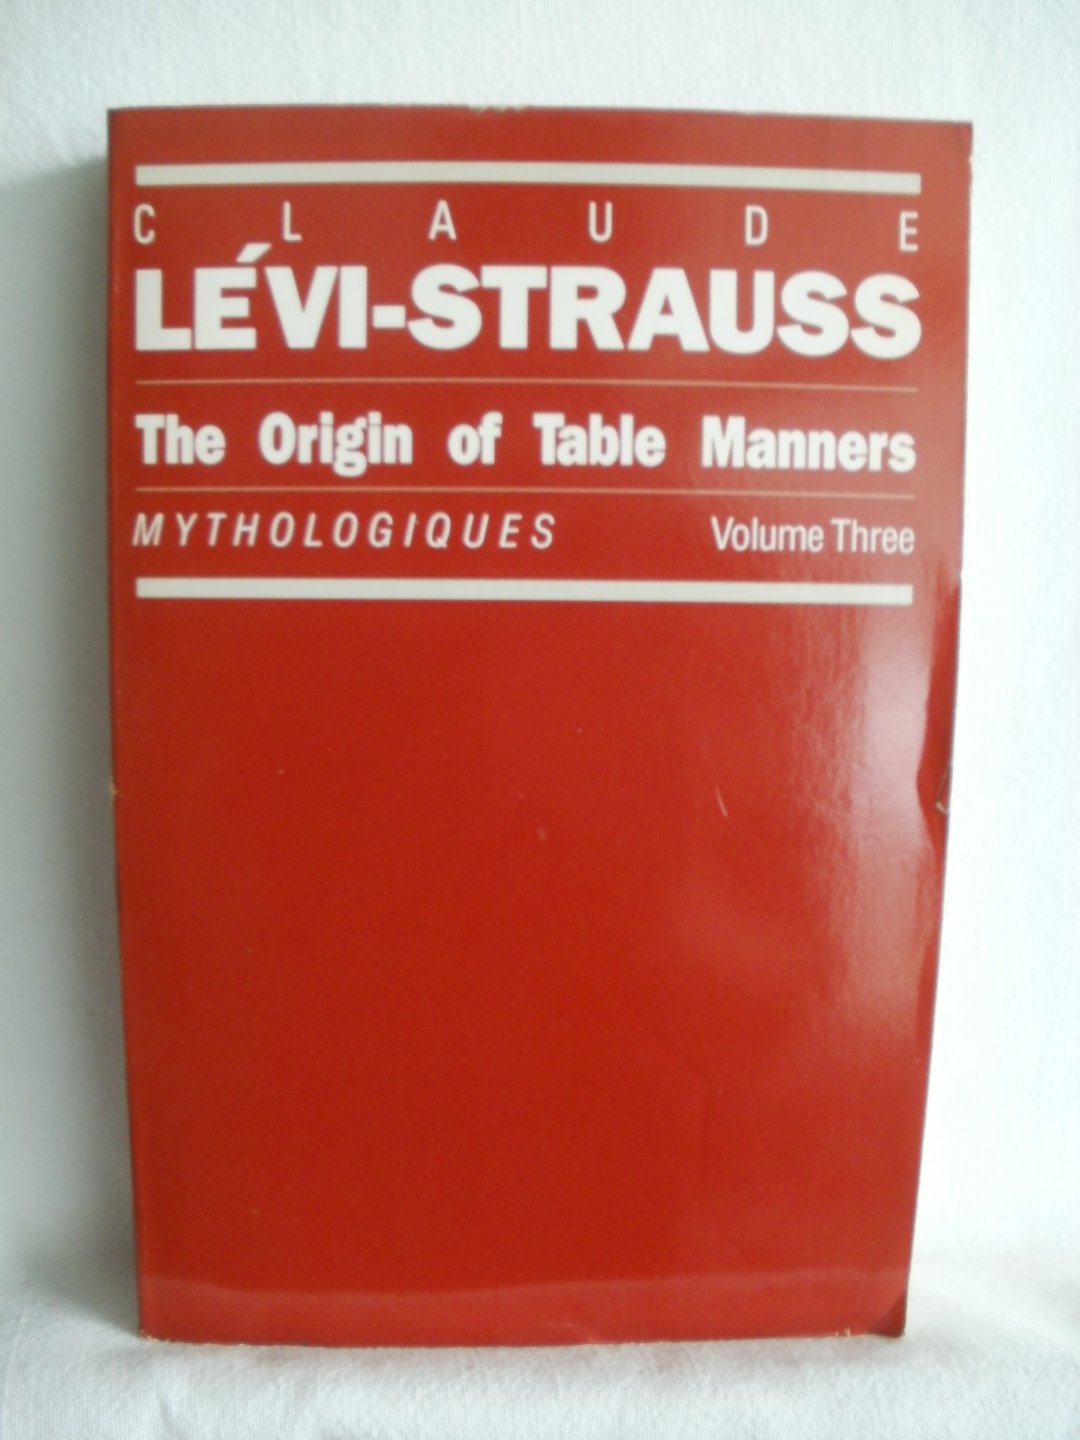 Levi-Strauus, Claude - The Origin of Table Manners. Mythologiques Vol. 3.